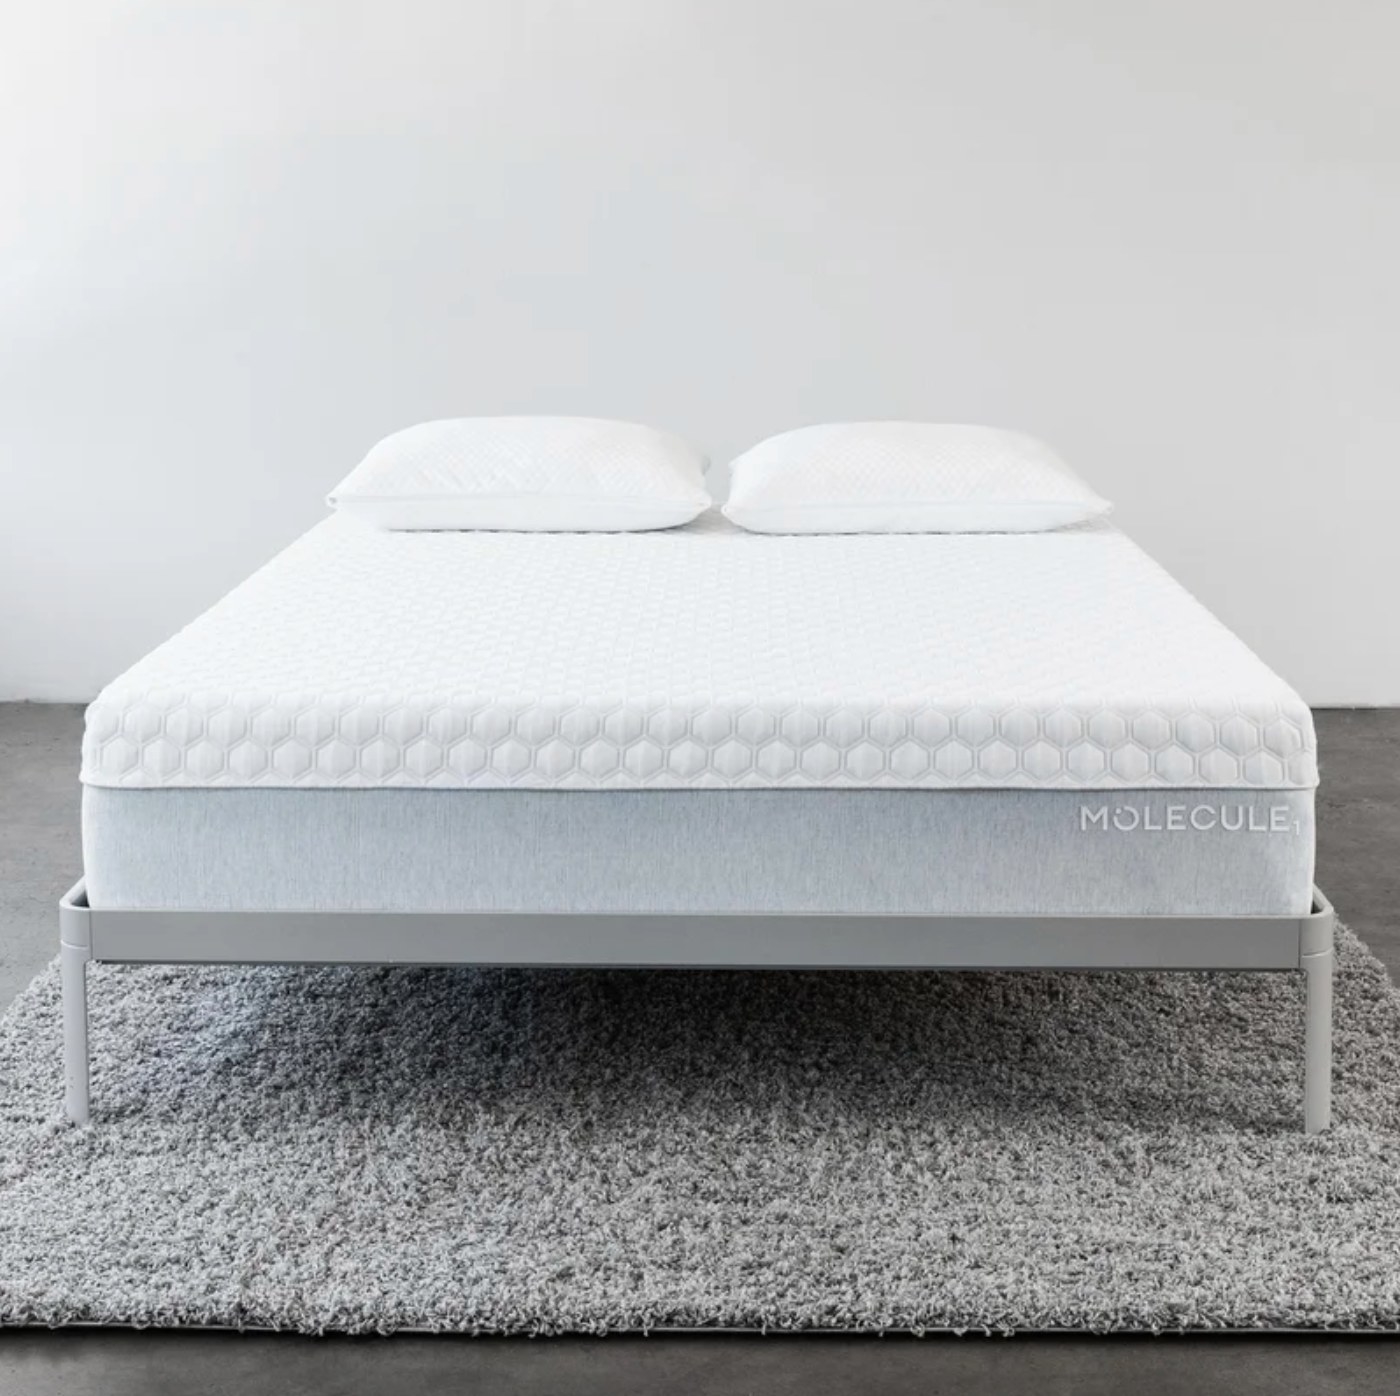 The memory foam mattress